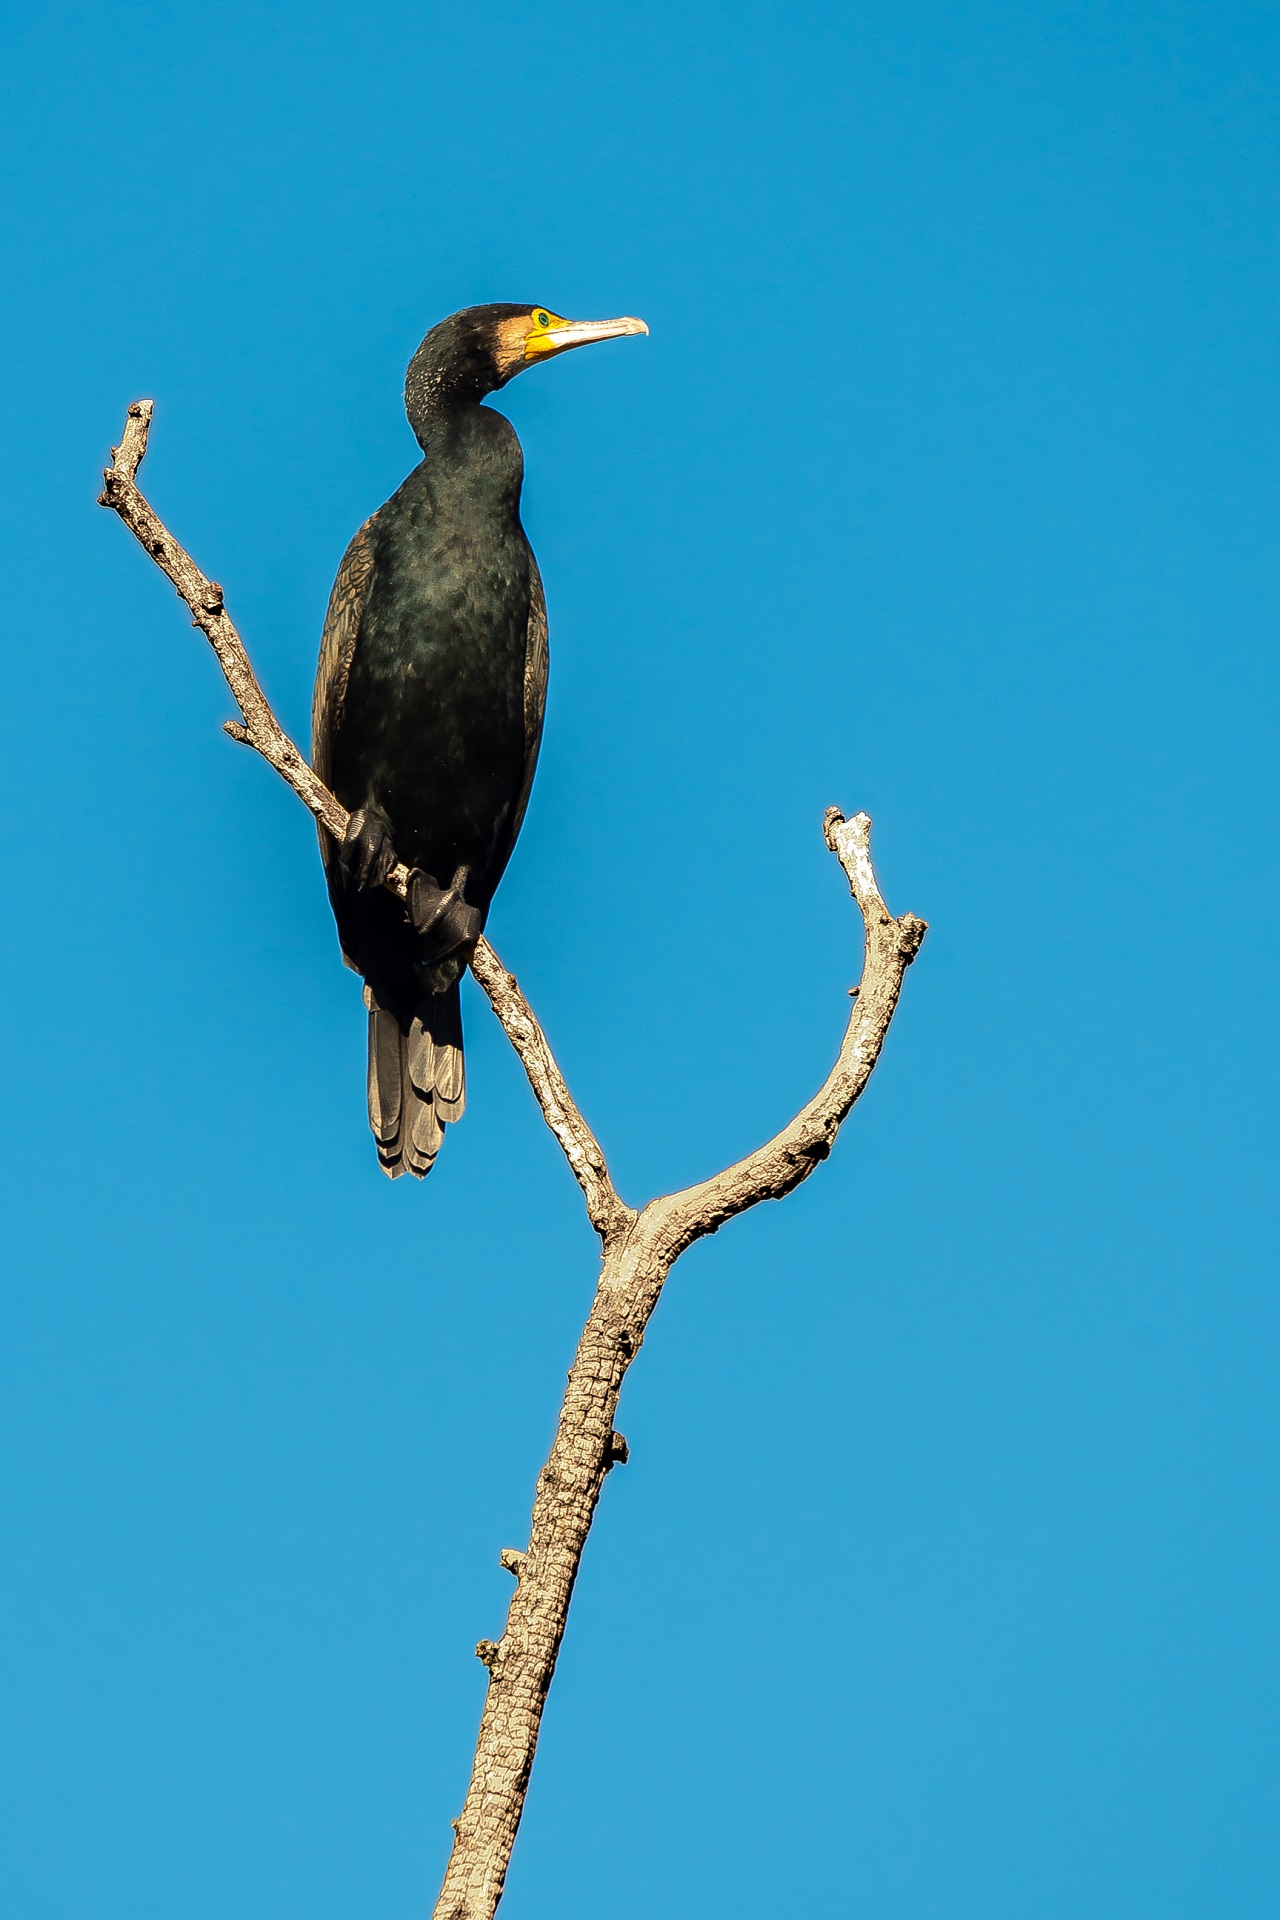 The cormorant...